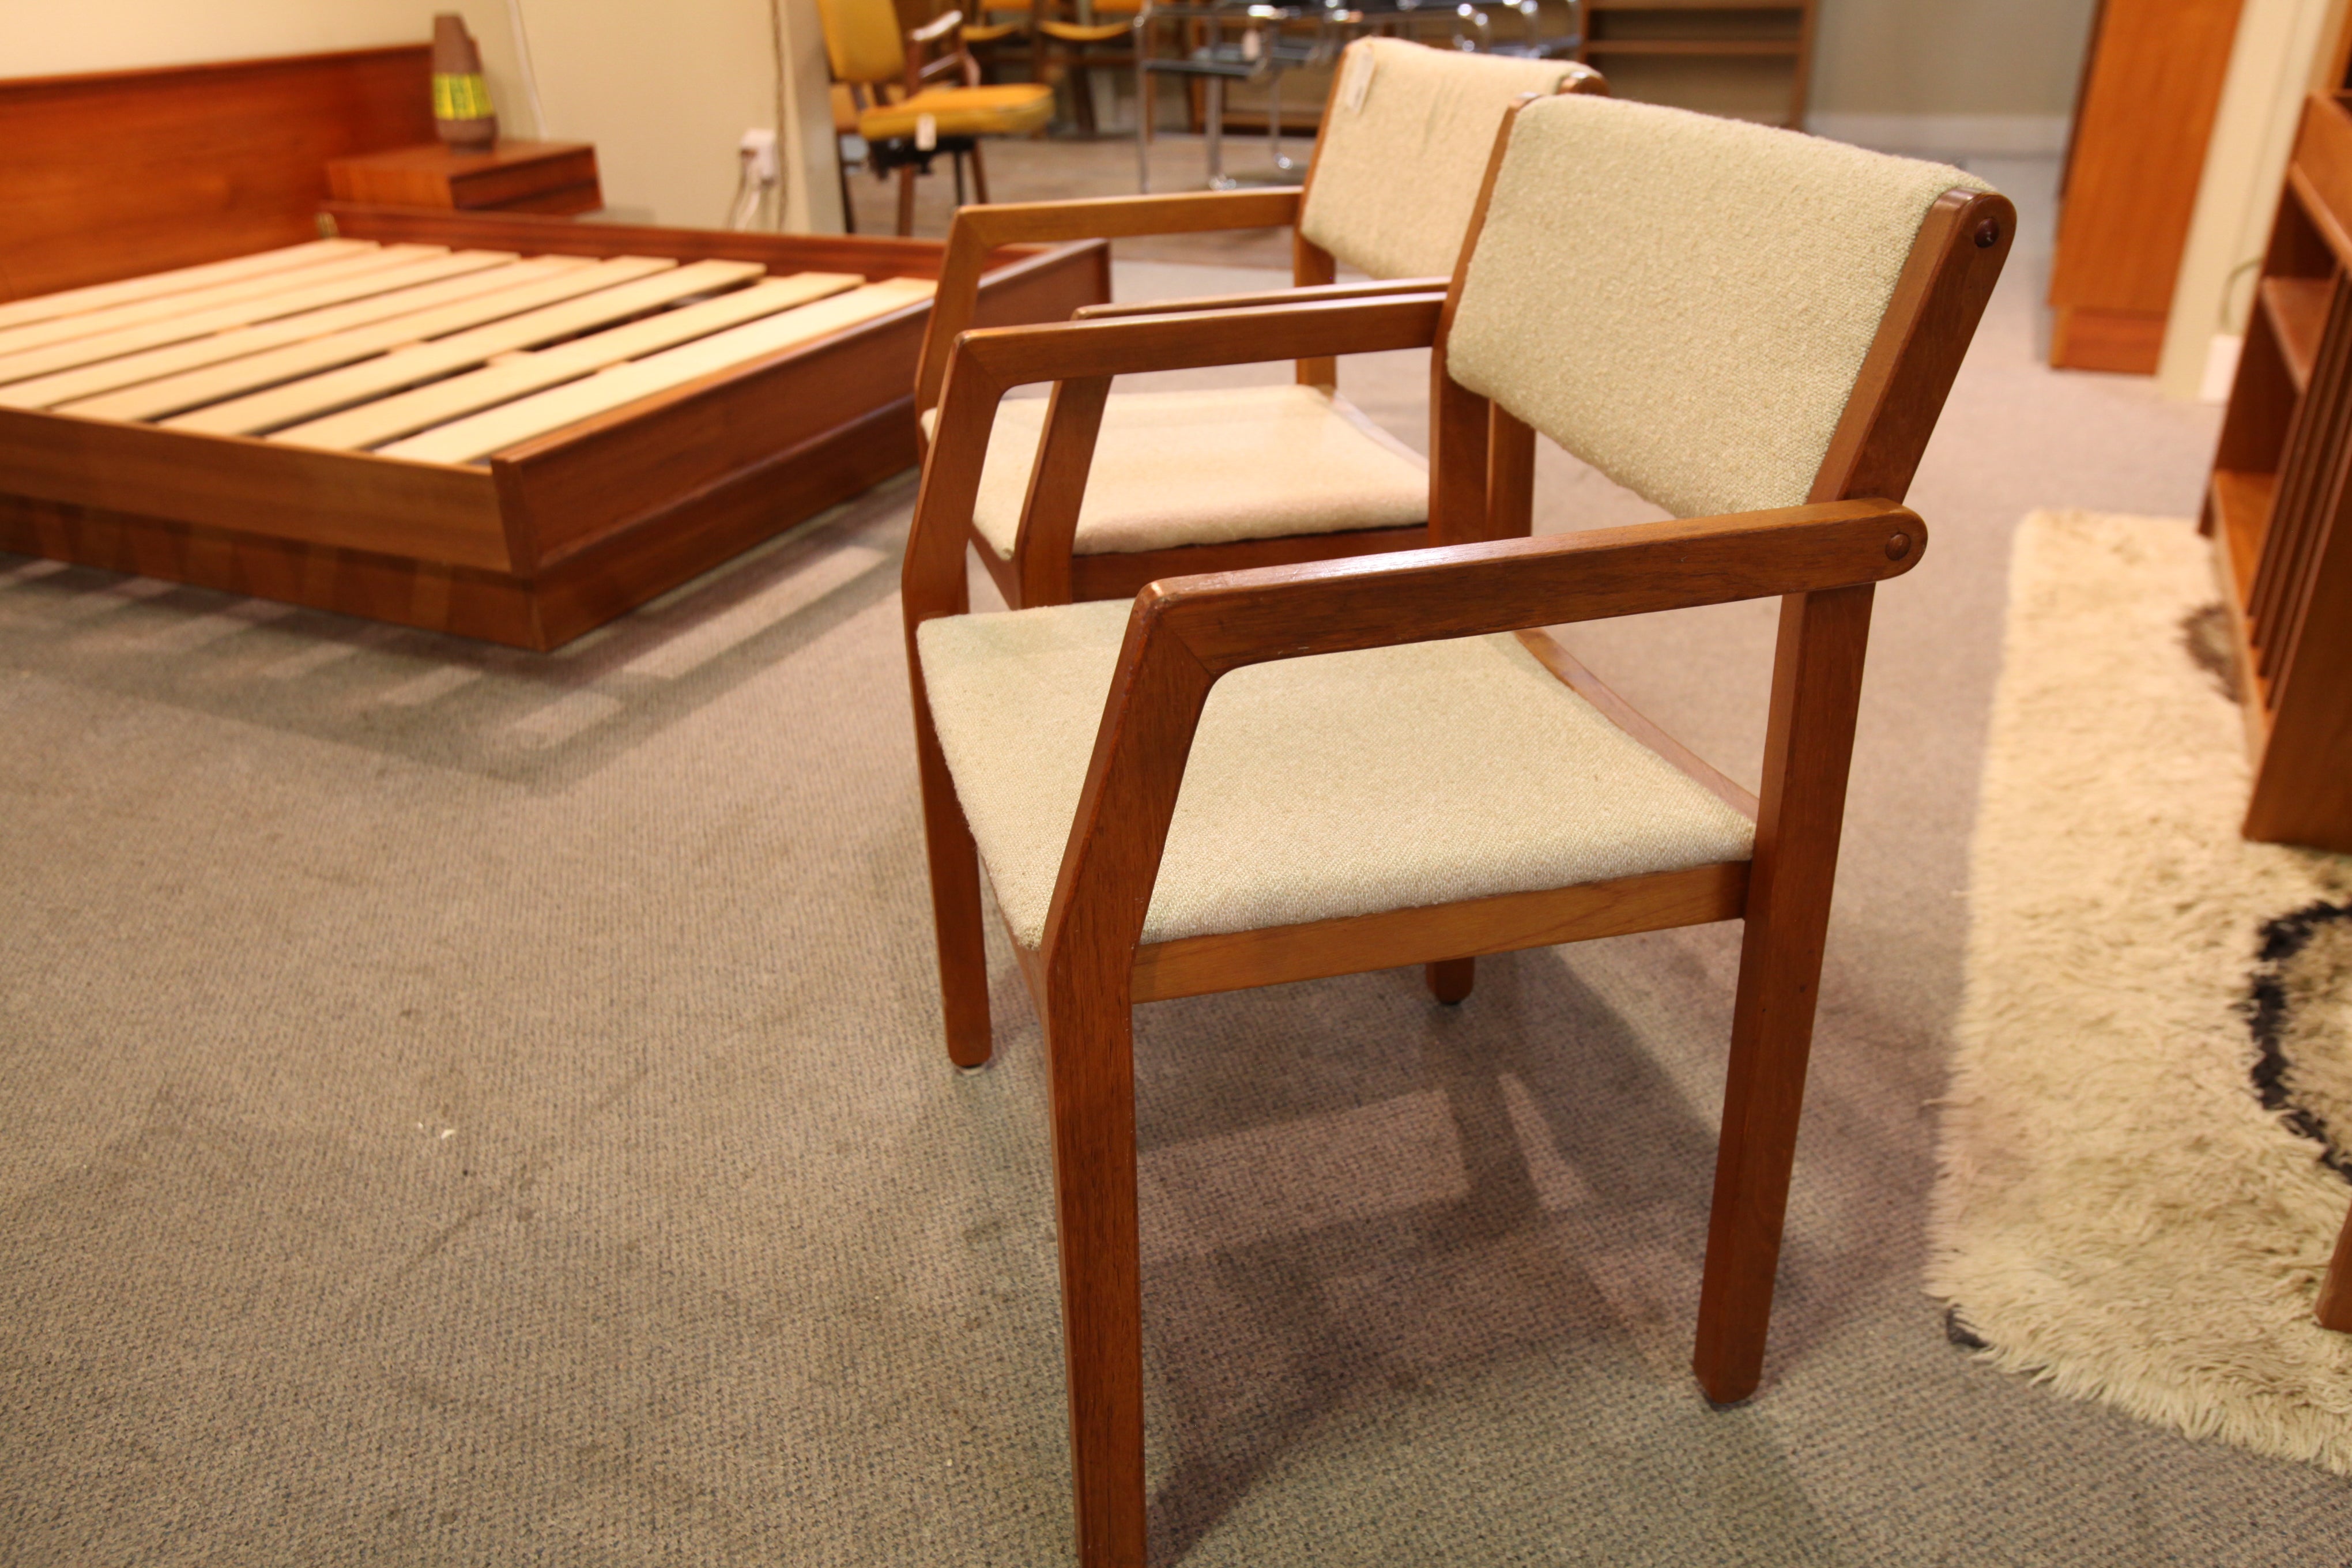 Set of 2 Vintage Teak Arm Chairs (22.75"W x 21"D x 31"H)